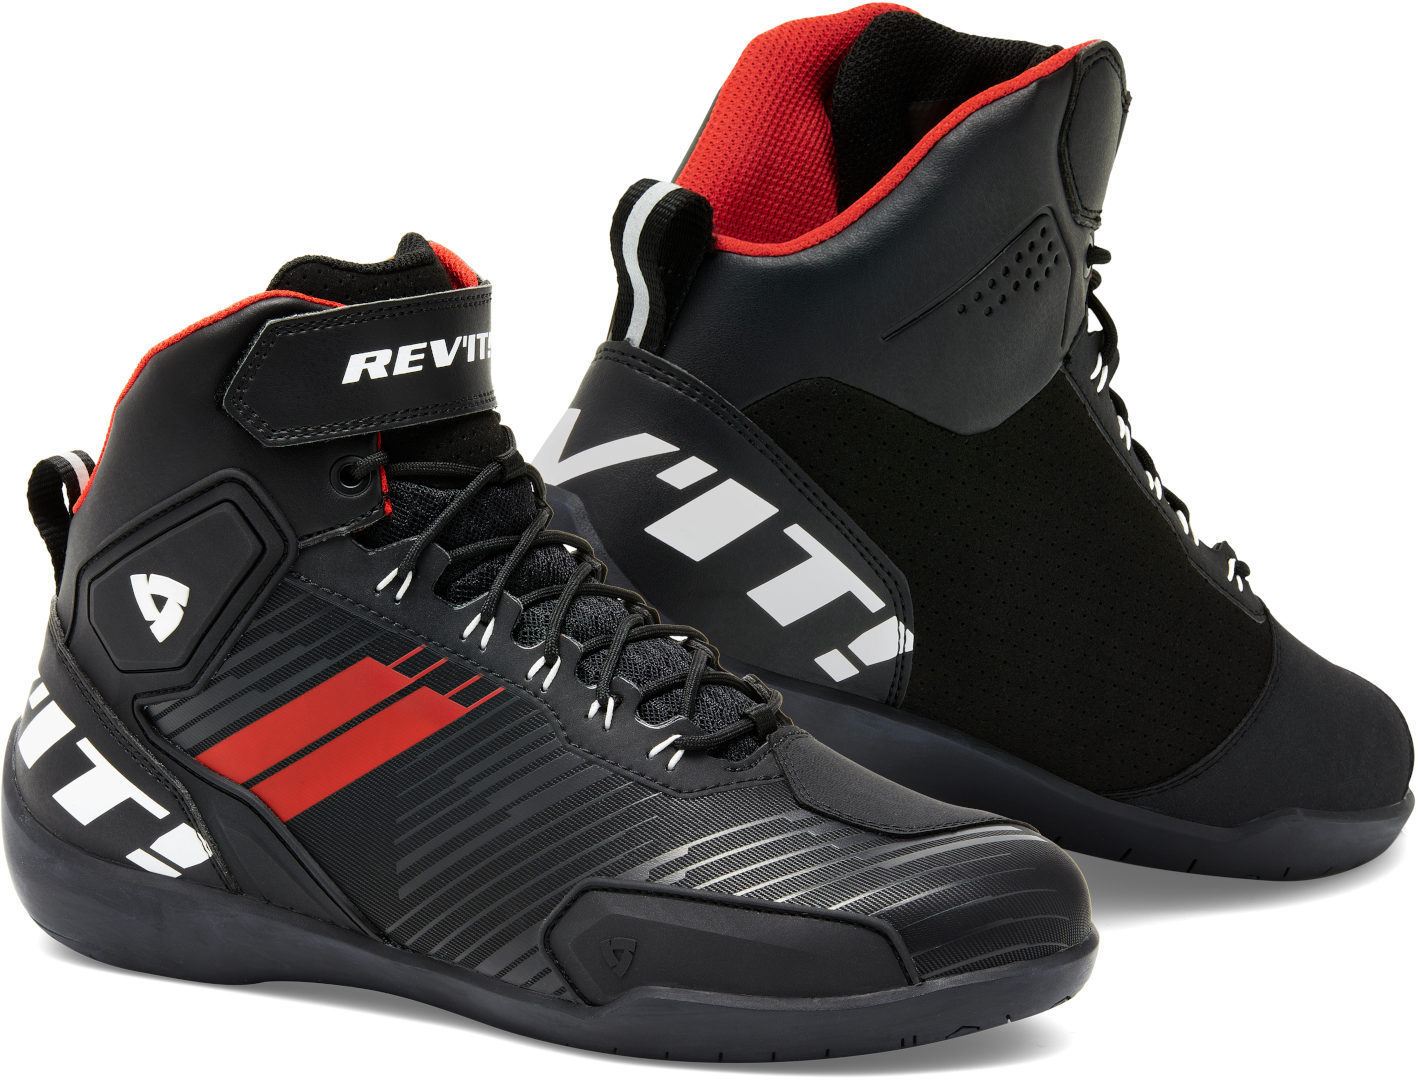 Revit G-Force Motorradschuhe, schwarz-weiss-rot, Größe 39 für Frauen, schwarz-weiss-rot, Größe 39